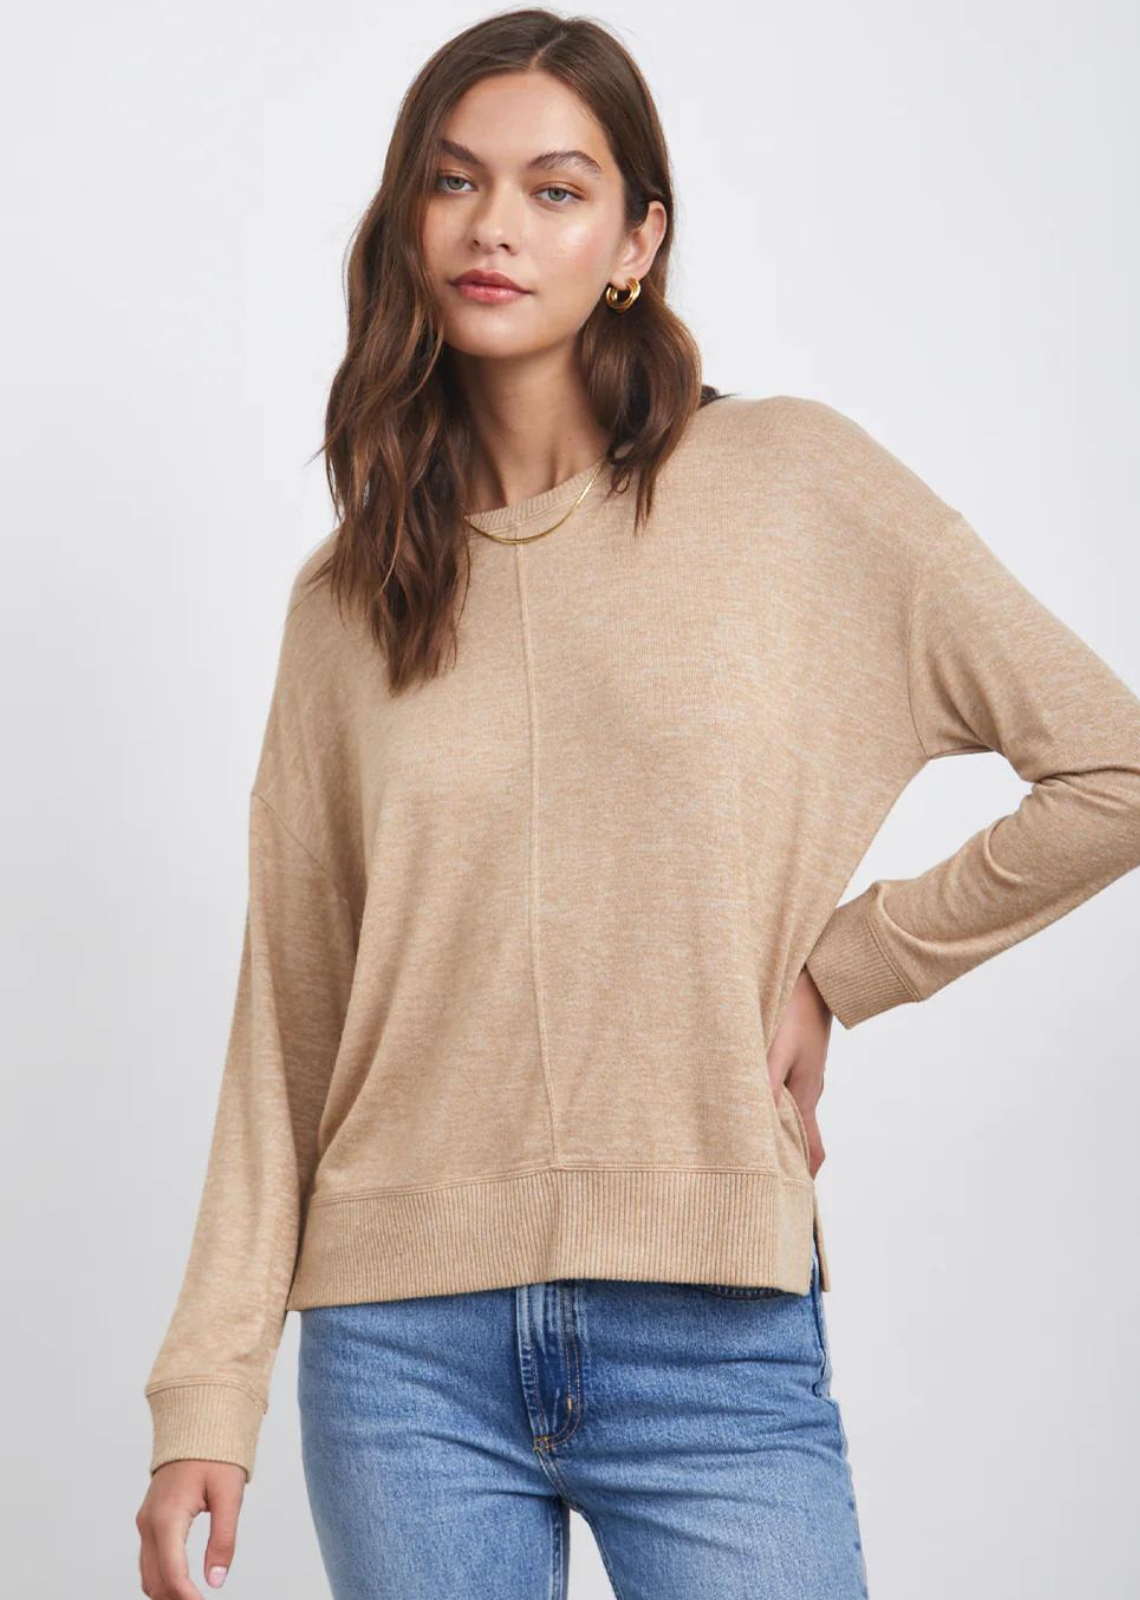 Rails - Women's Anise Sweater - Grey Multi - XL